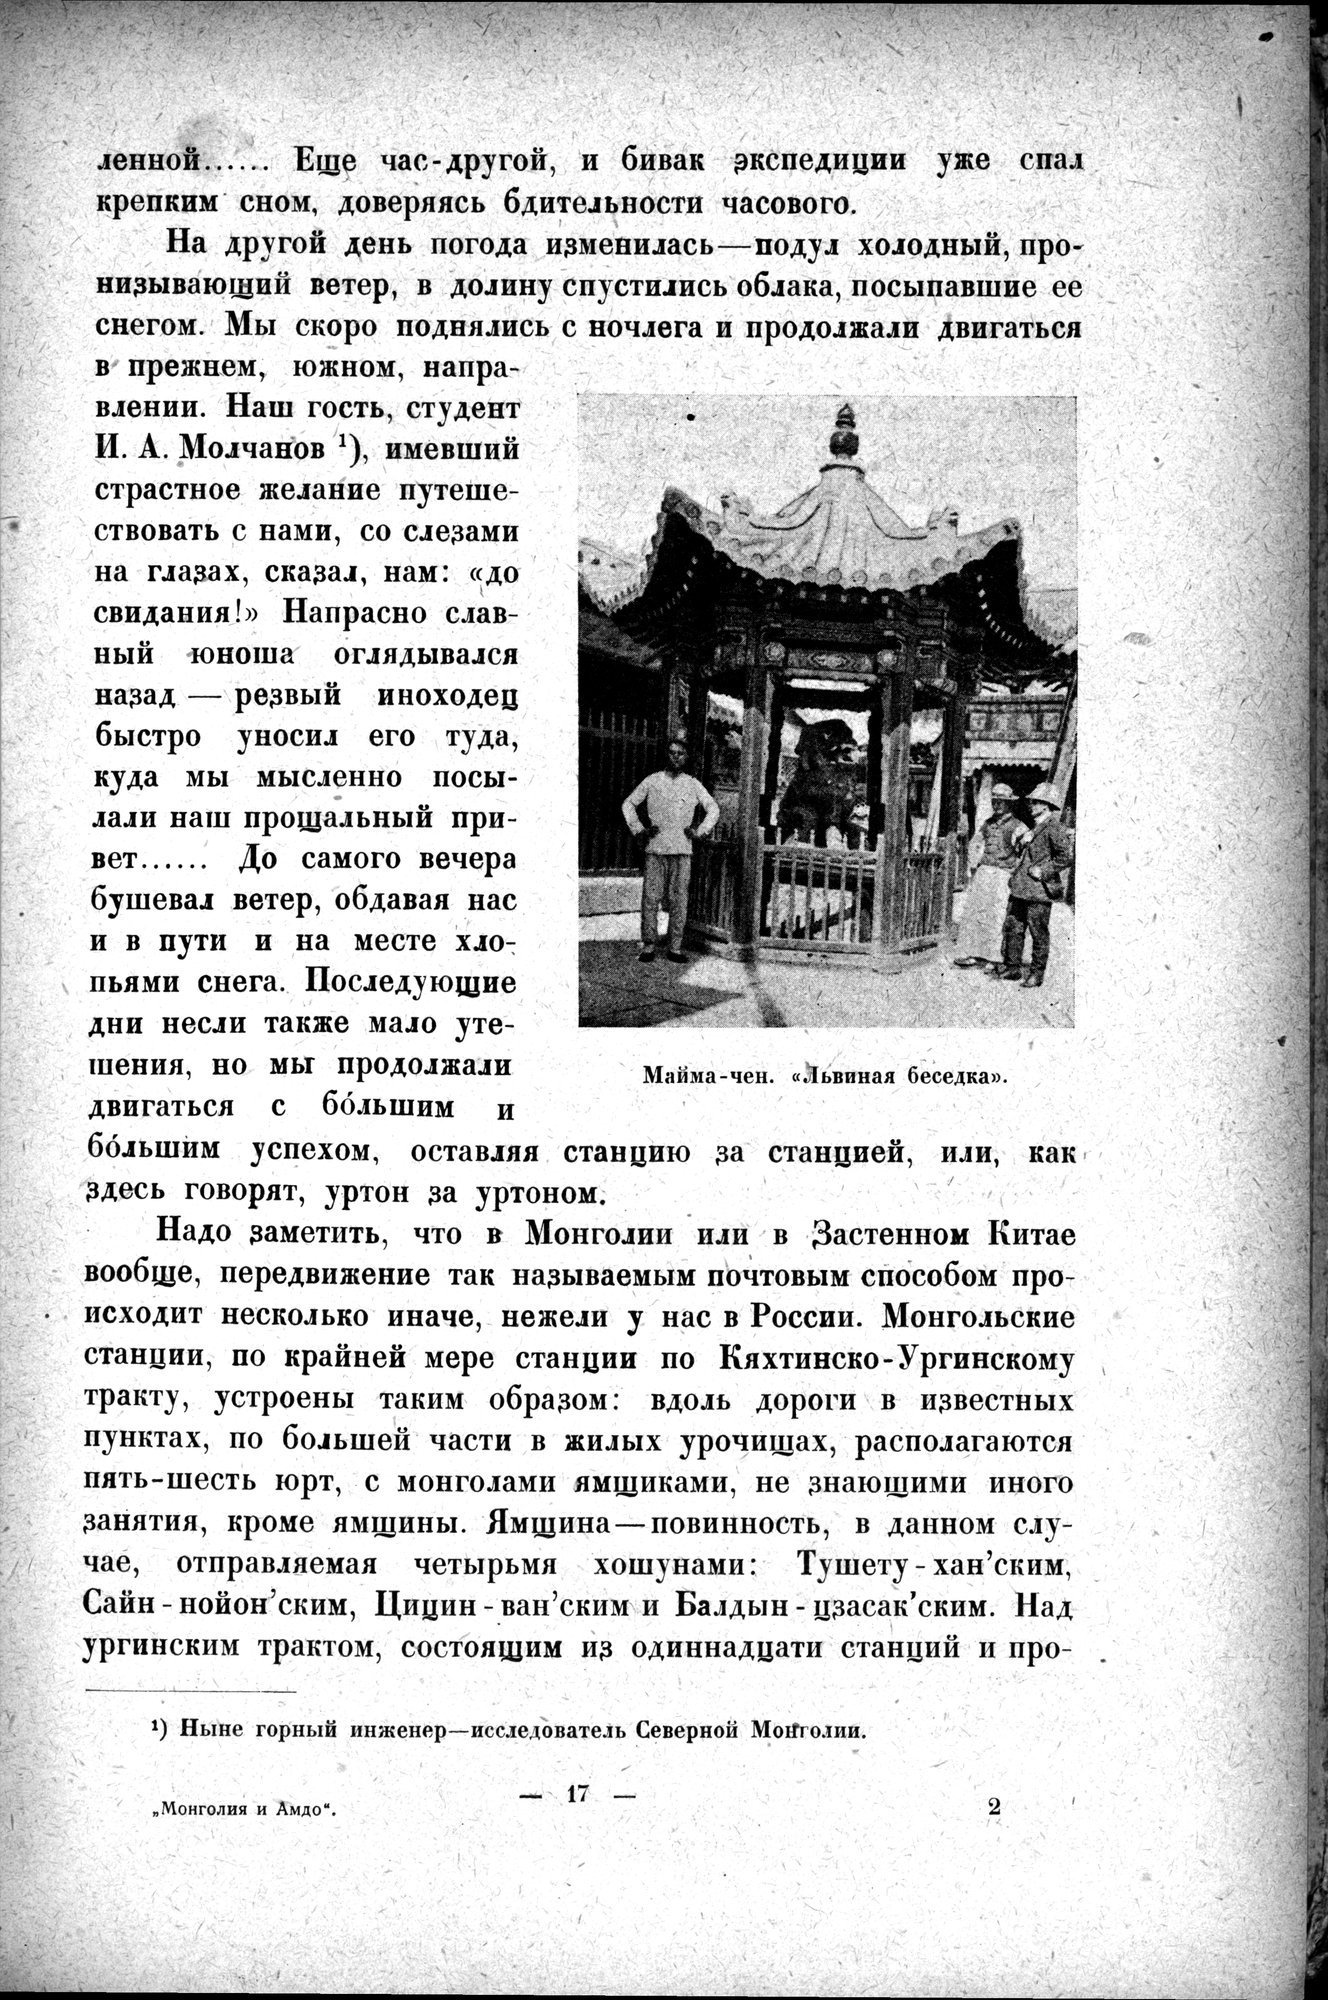 Mongoliya i Amdo i mertby gorod Khara-Khoto : vol.1 / Page 33 (Grayscale High Resolution Image)